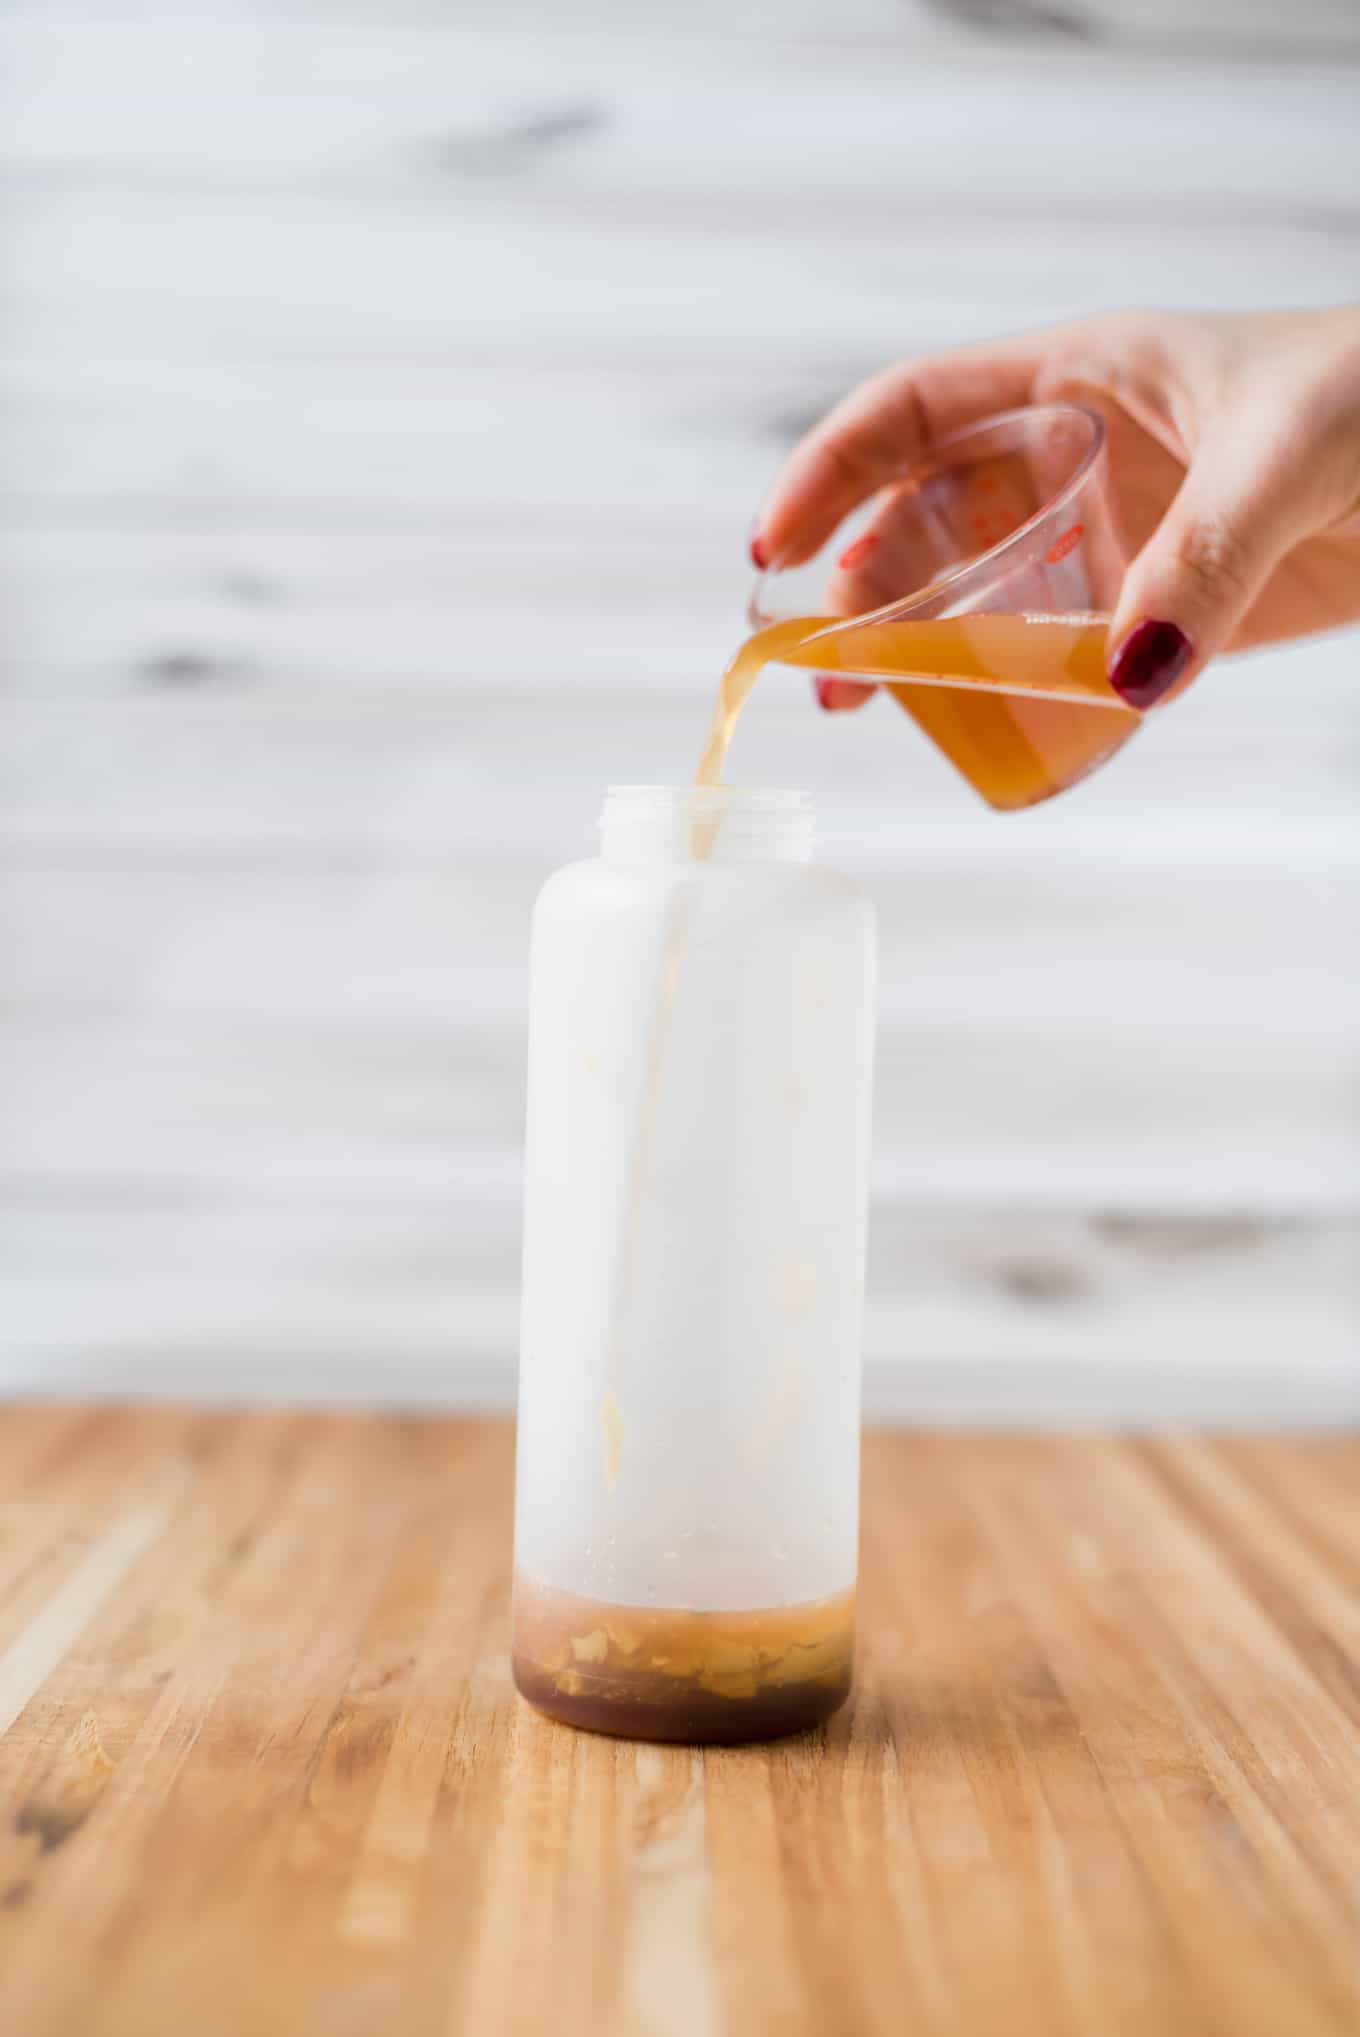 A hand pouring vinegar into a plastic bottle.